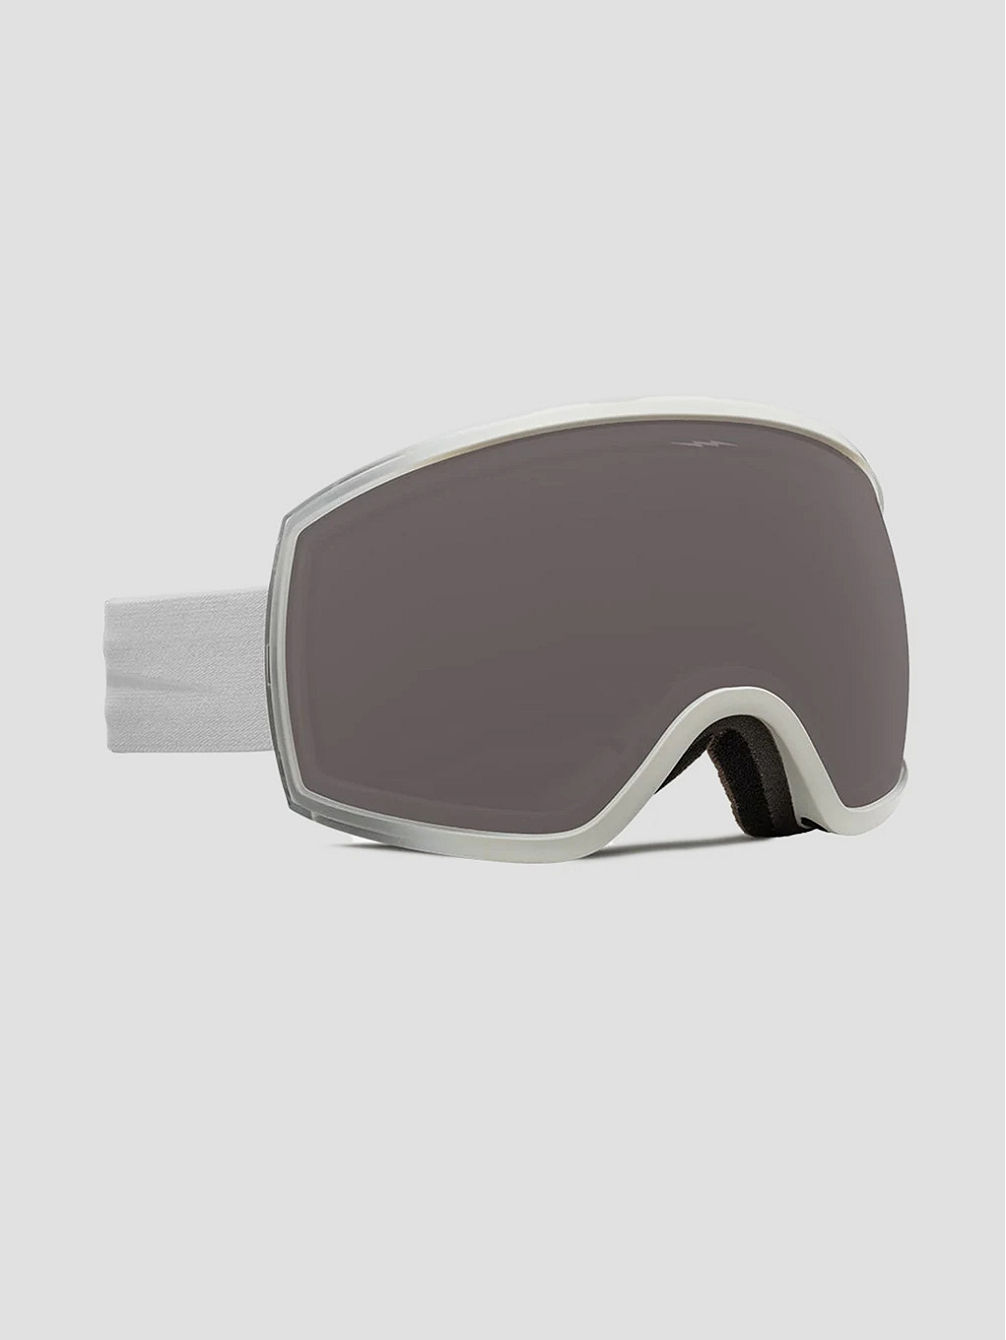 EG2-T Mt Stealth Grey Bird (+Bonus Lens) Goggle